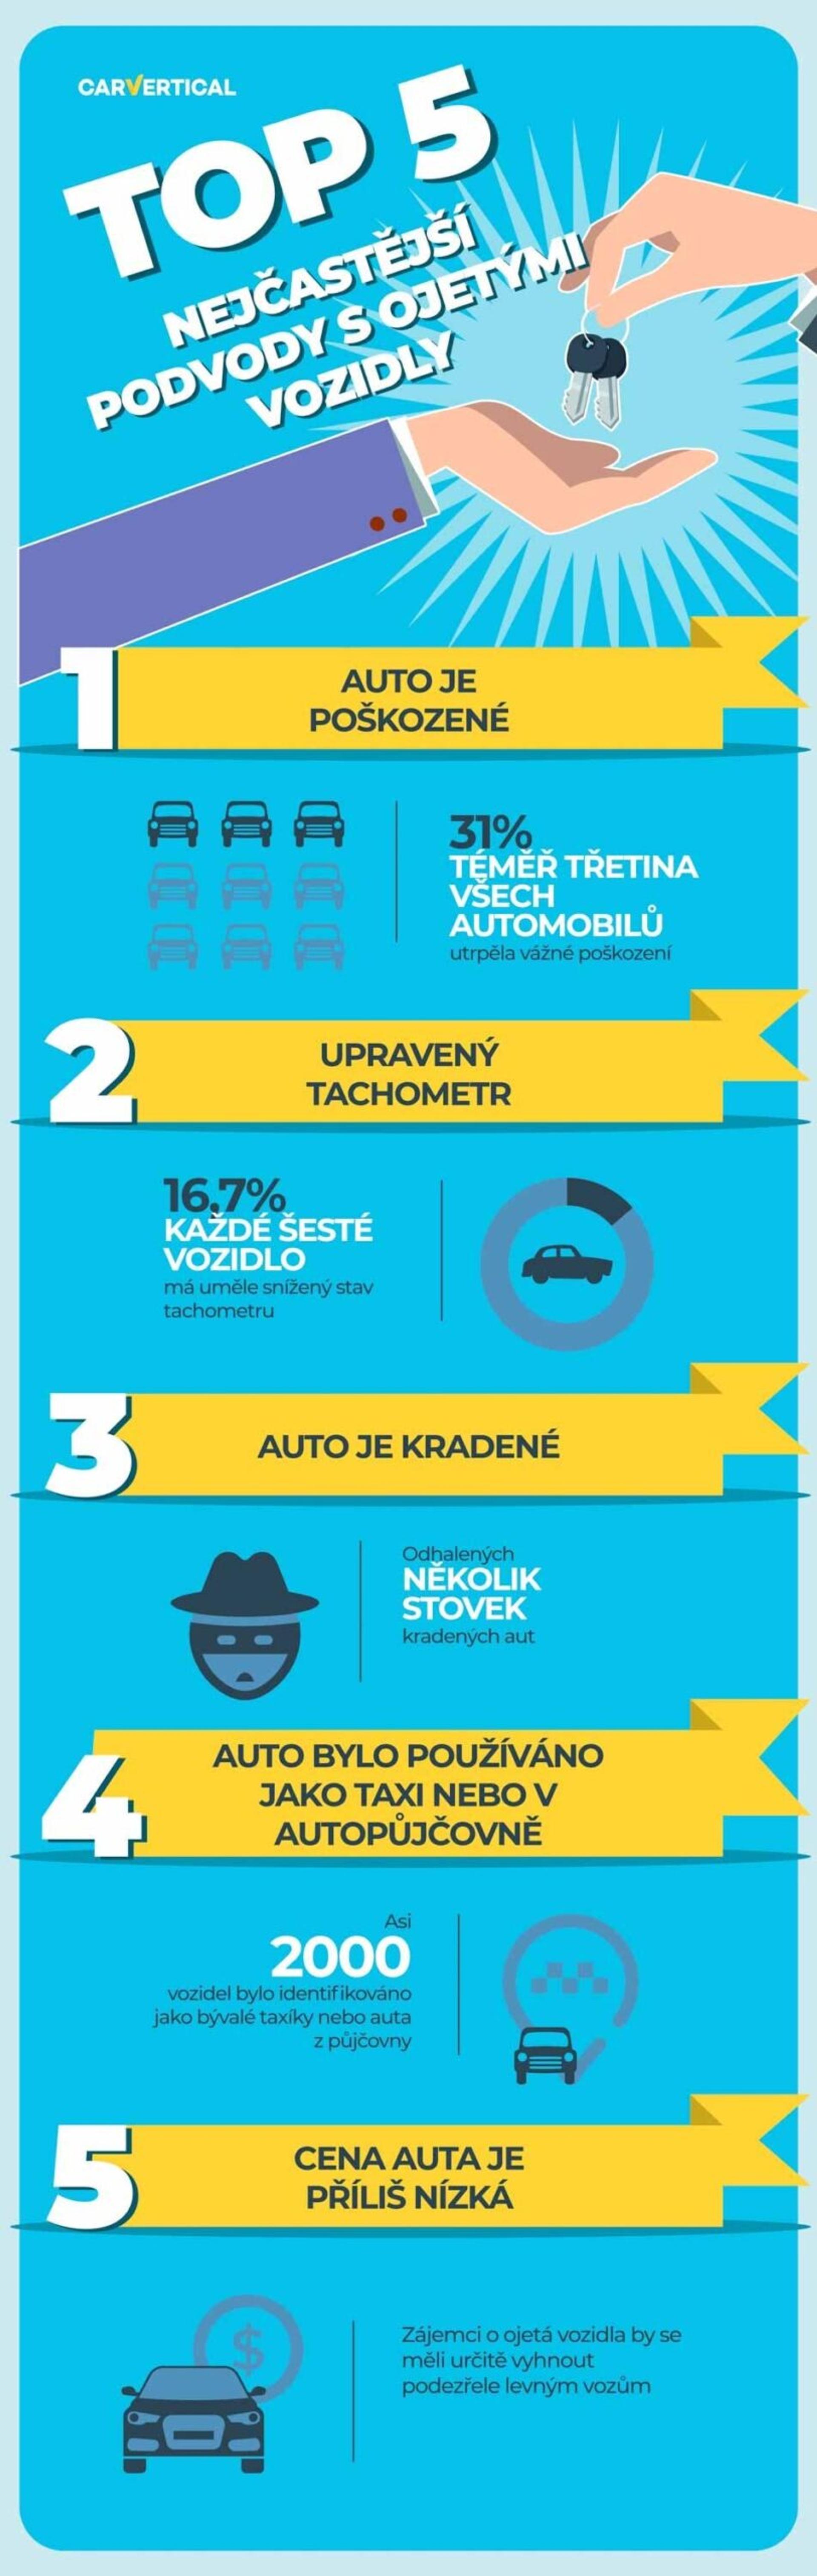 TOP 5  nejčastejši podvody ojetymi vozidly